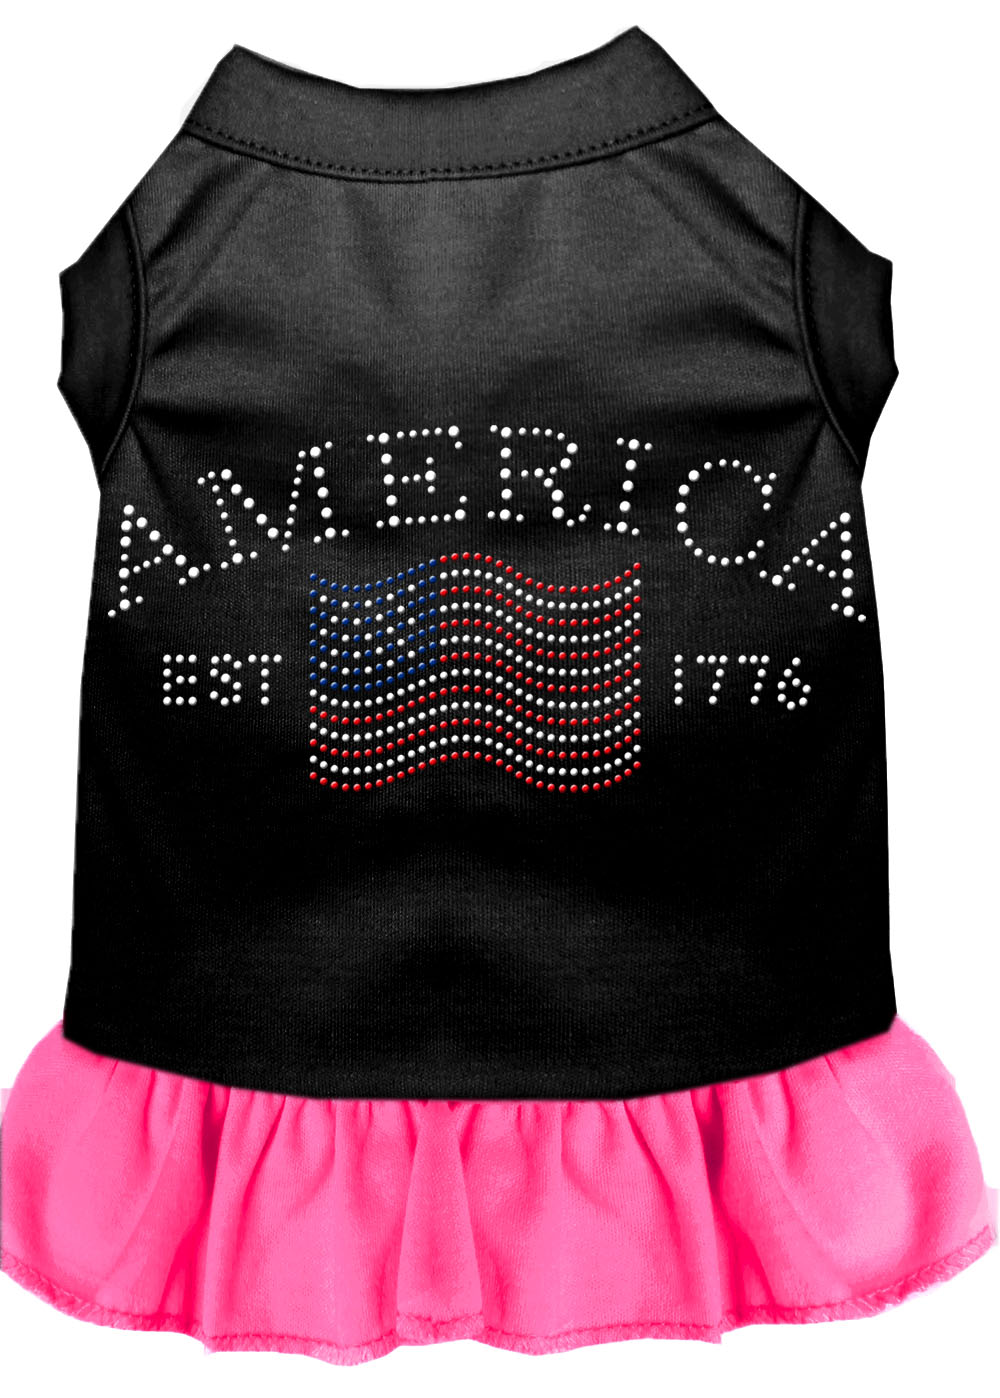 Classic America Rhinestone Dress Black with Bright Pink Med